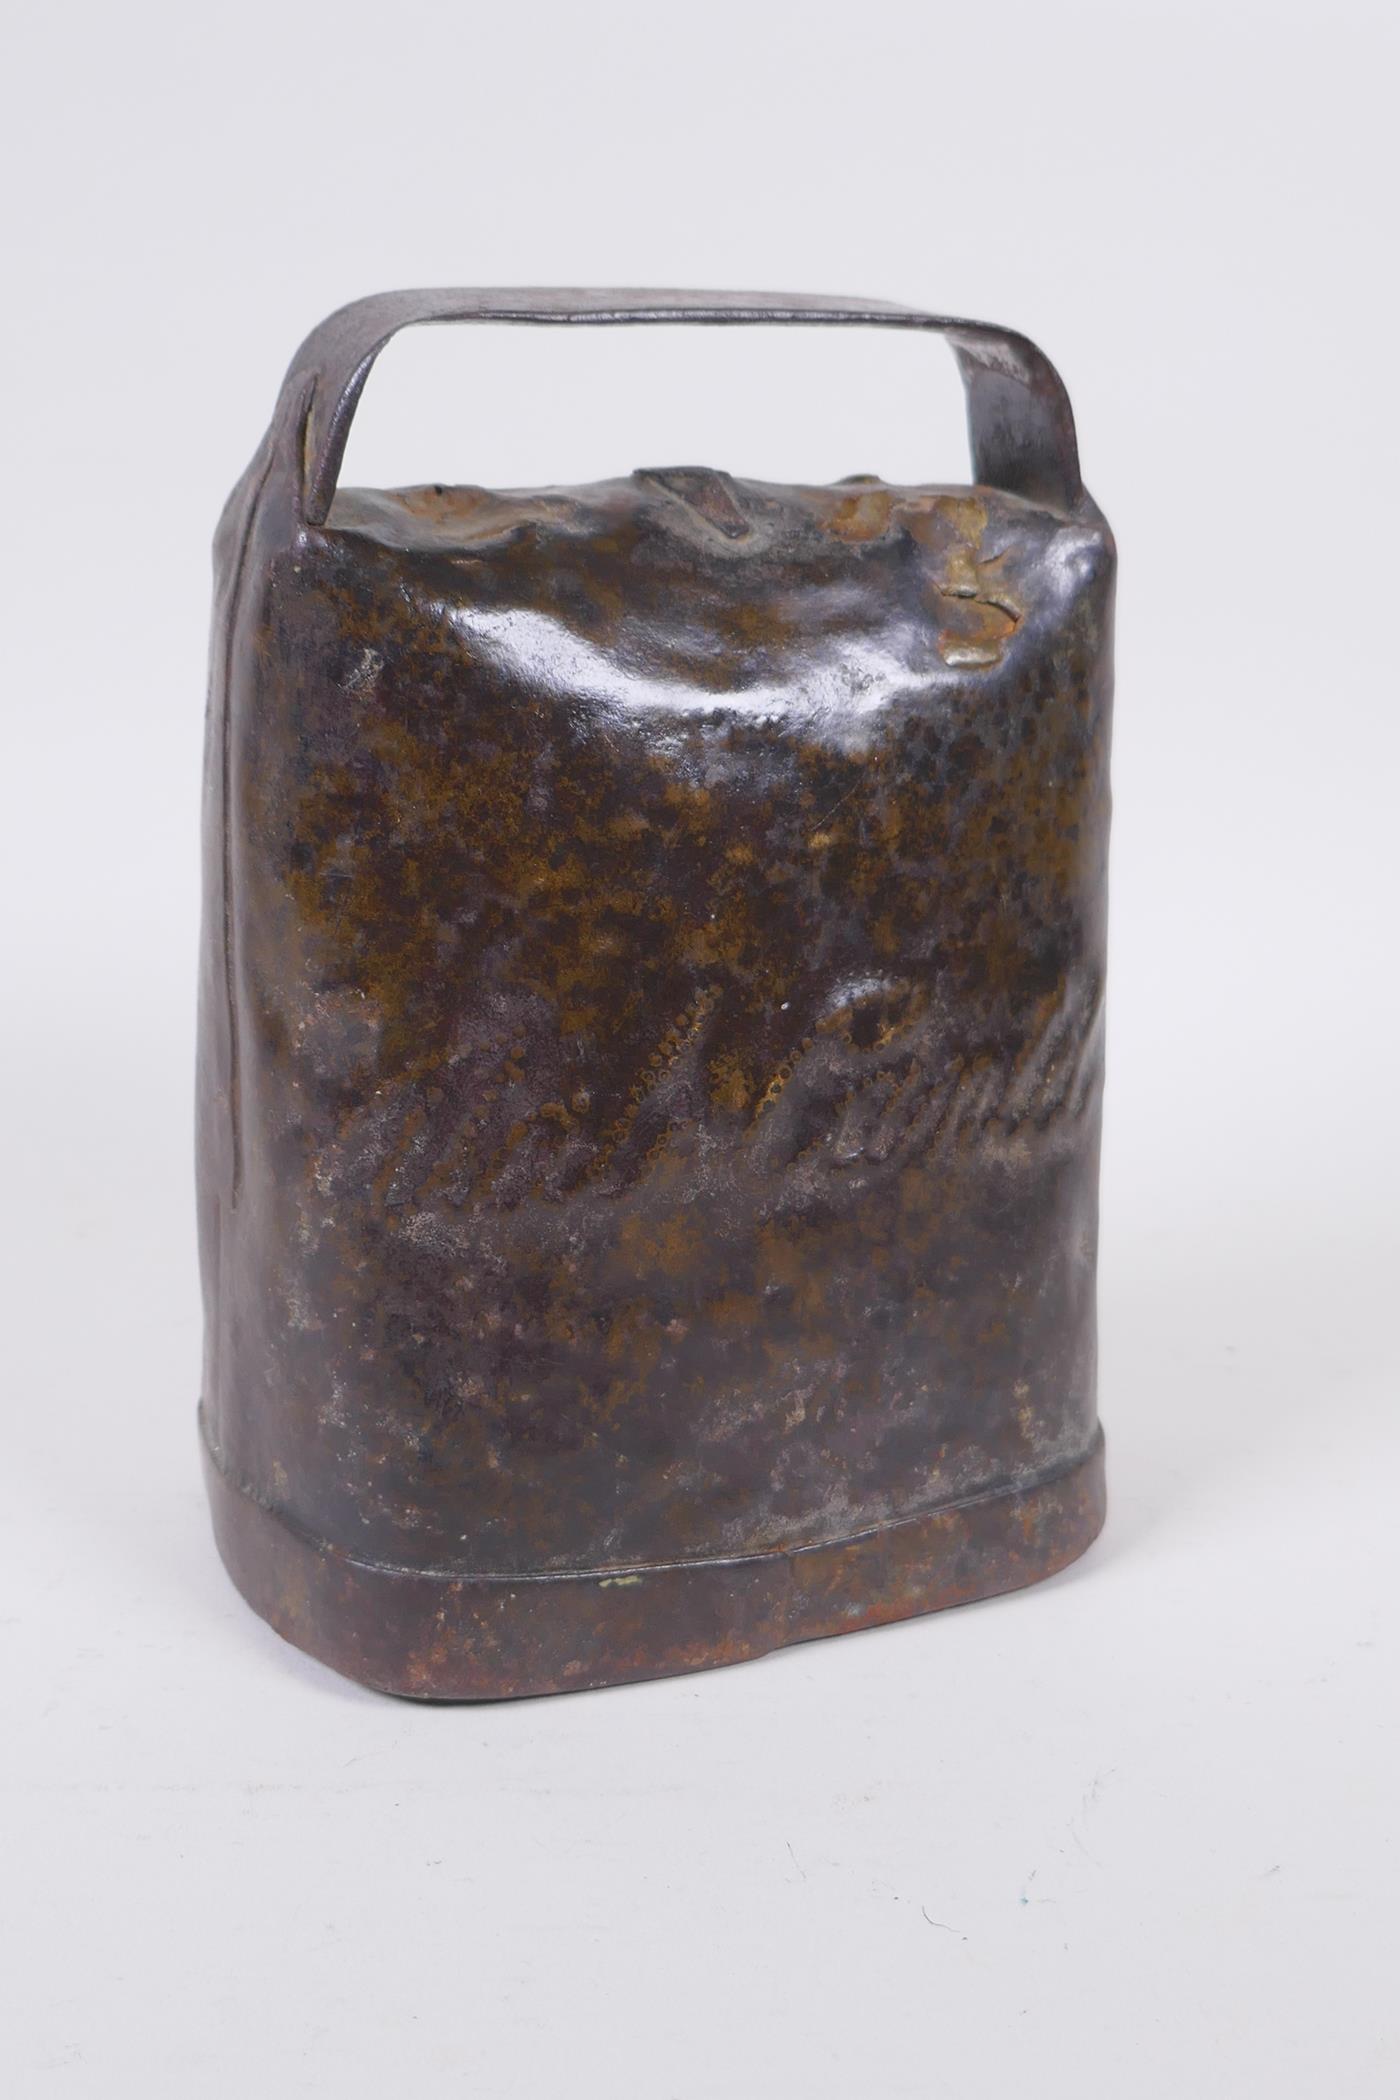 An antique continental cow bell, 14 x 19cm